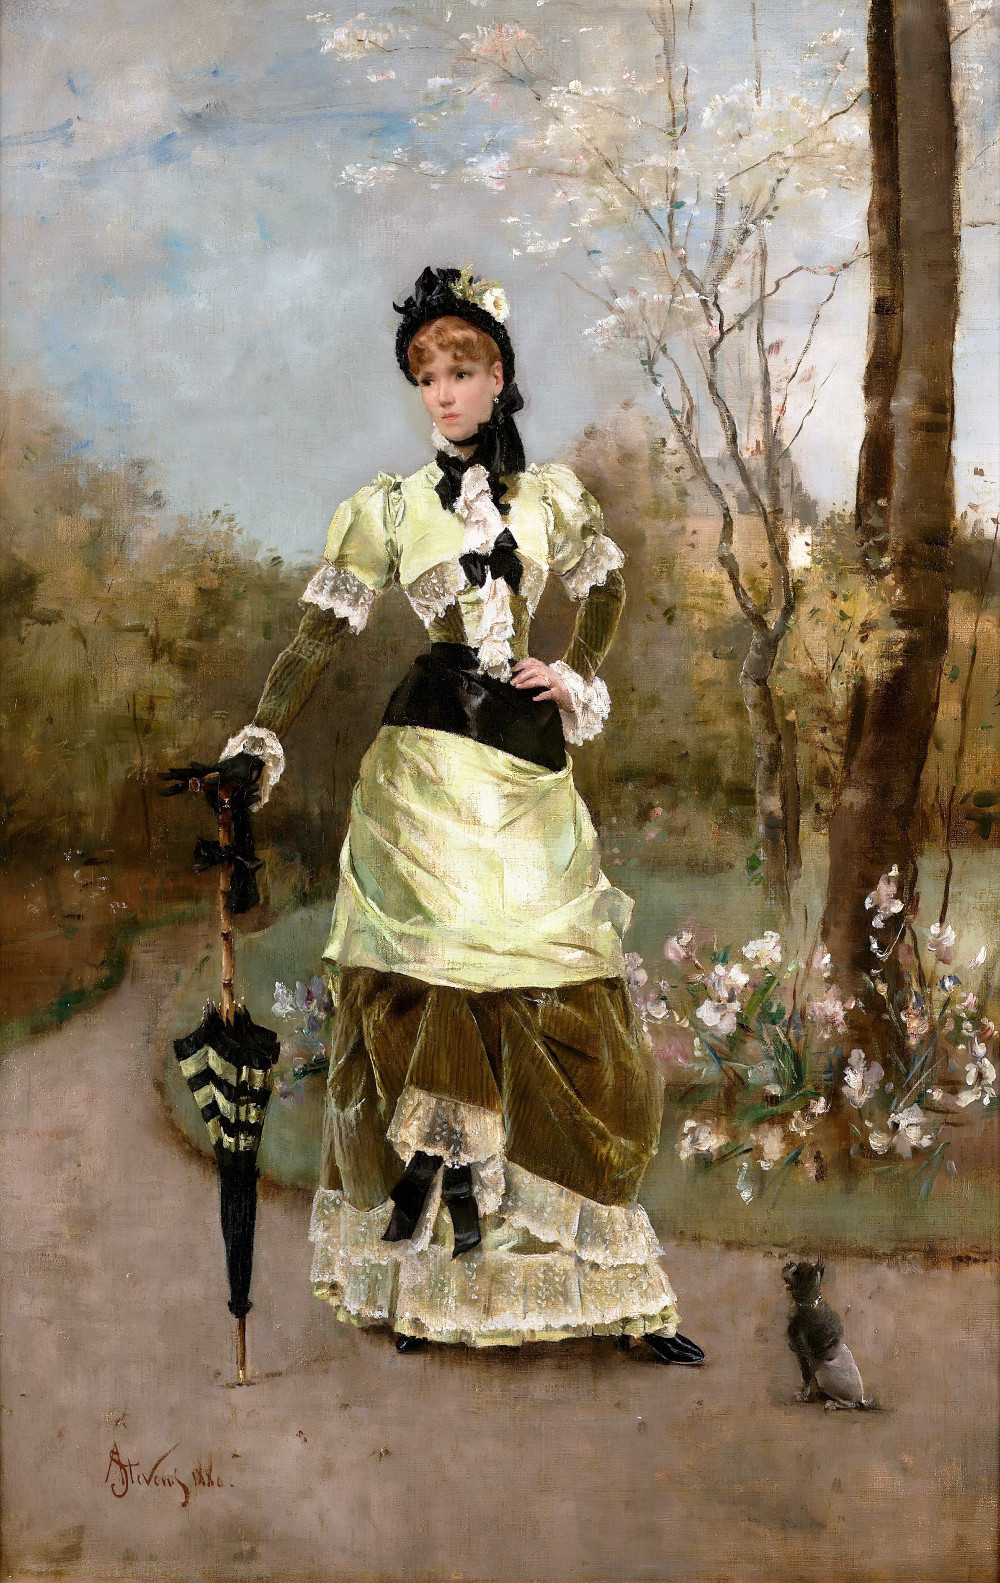 La Parisienne by Alfred Stevens, 1879